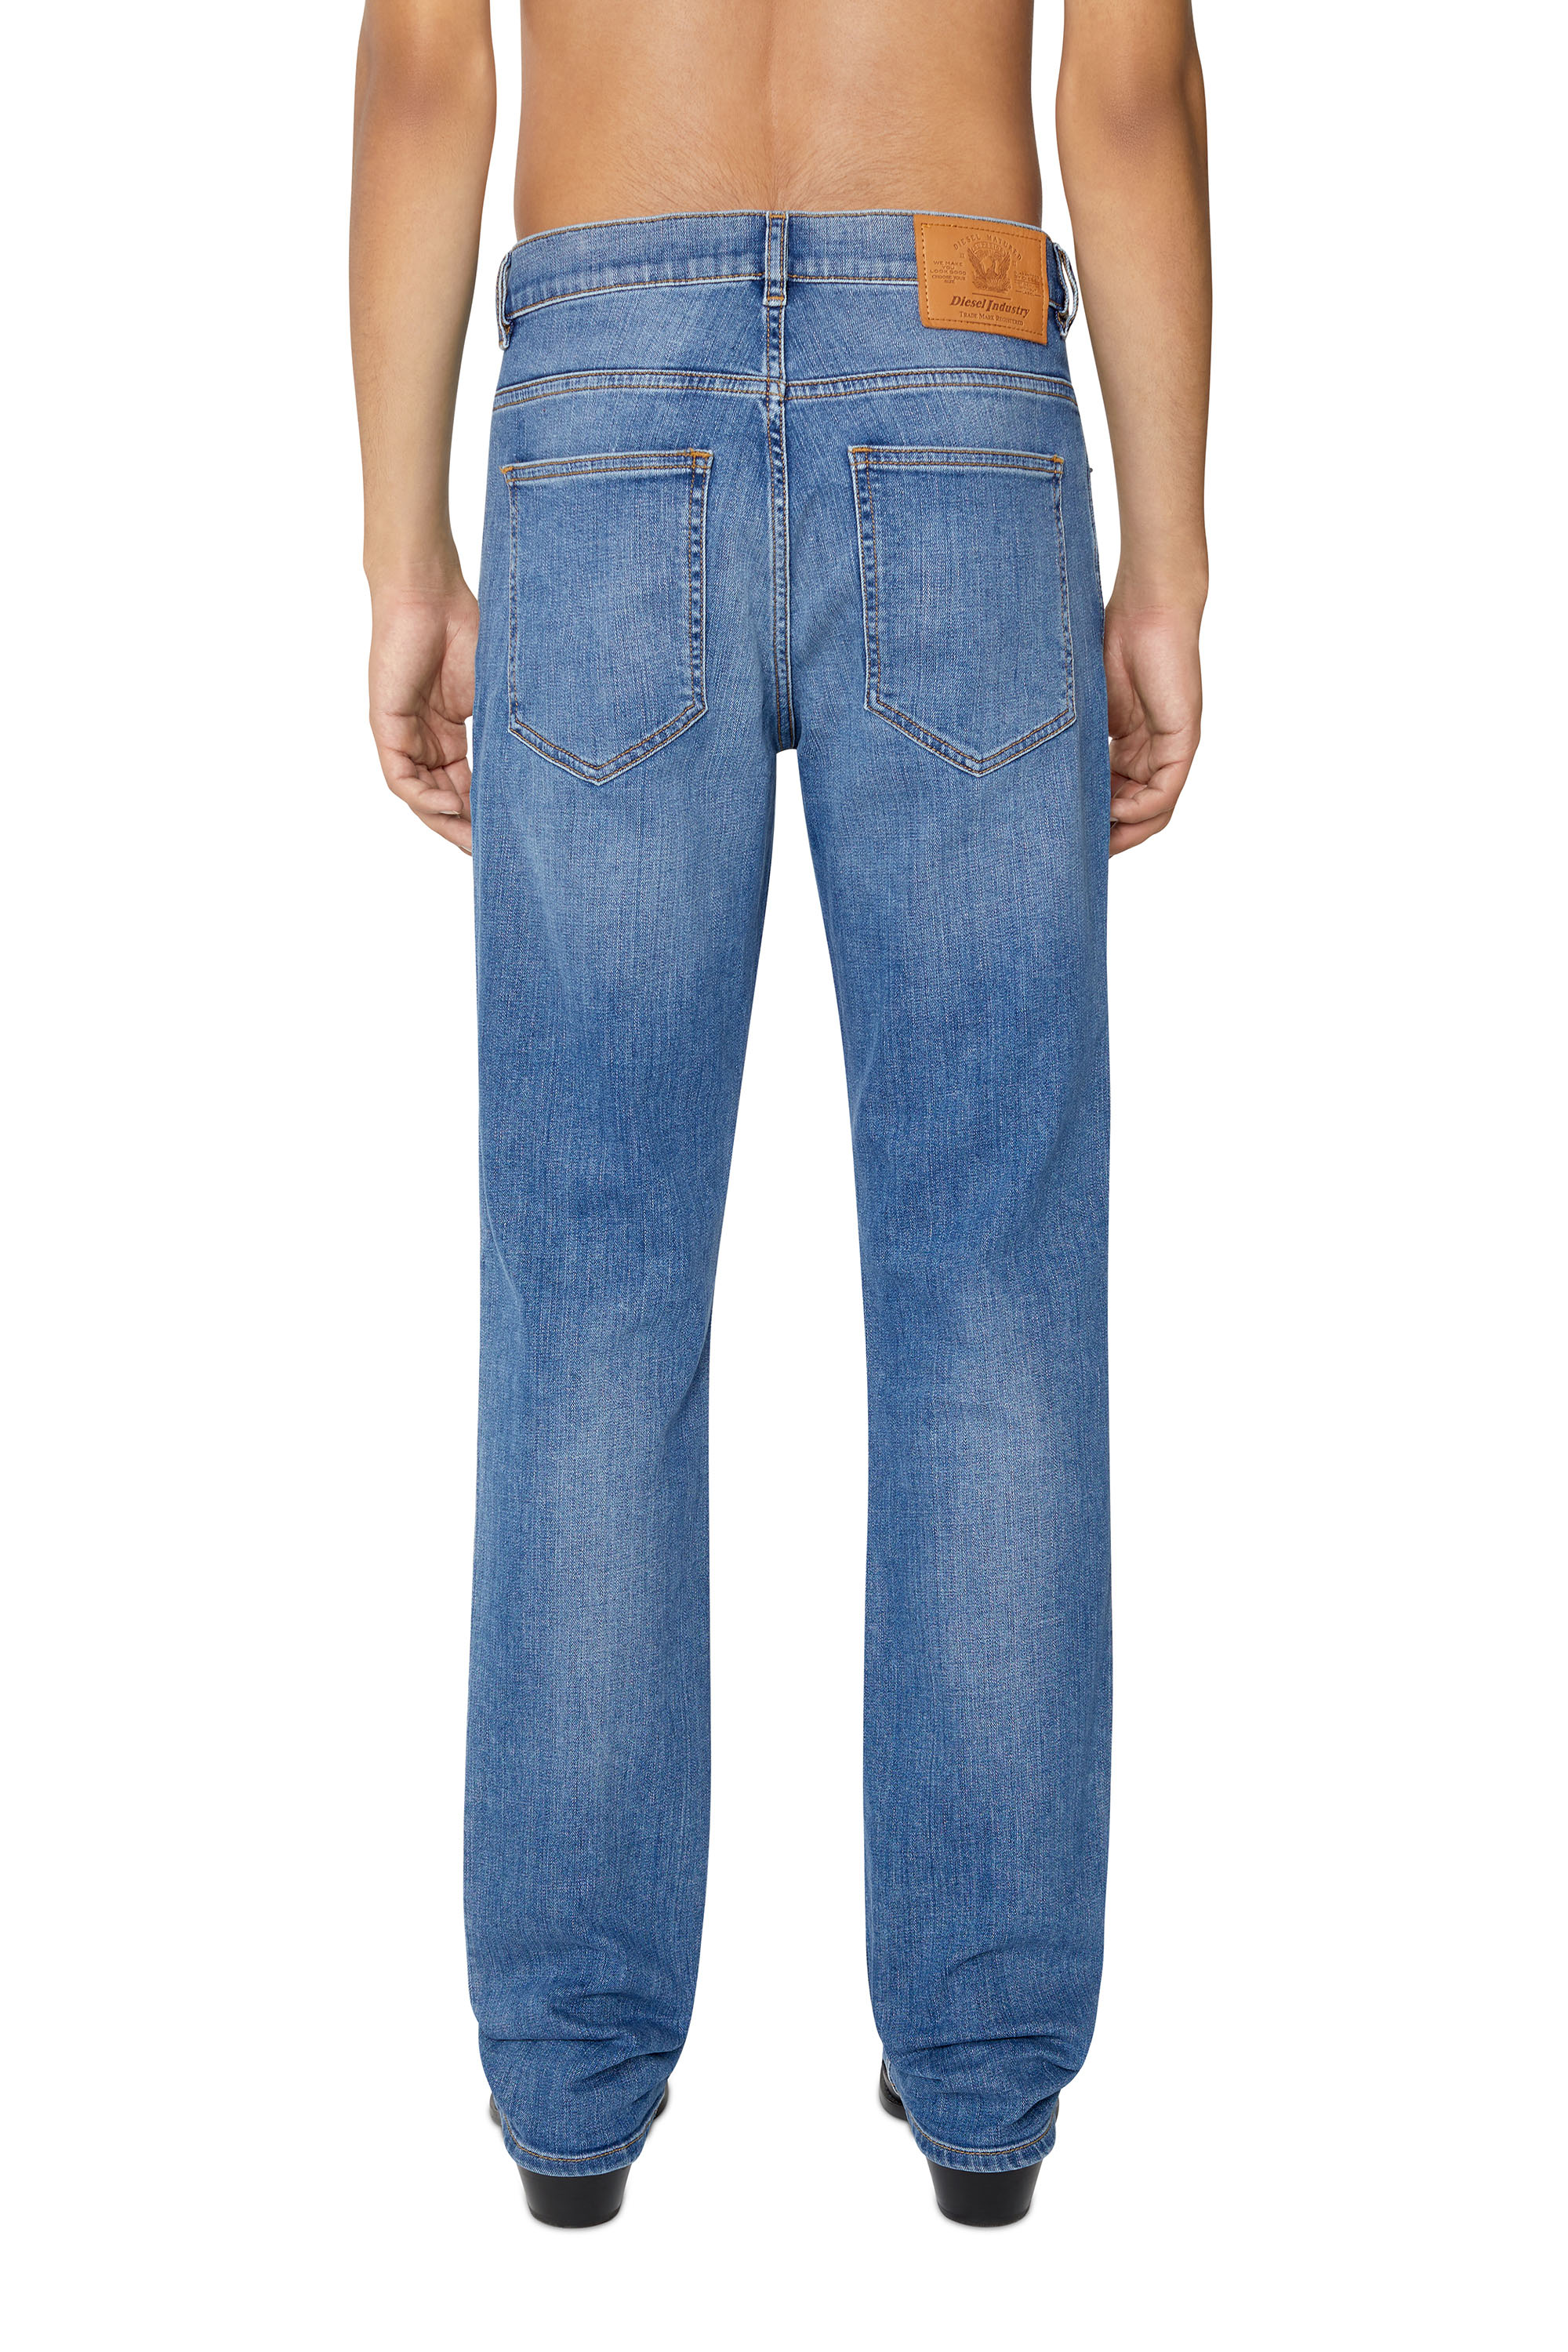 Bootcut JeansDIESEL in Denim da Uomo colore Blu 6% di sconto Uomo Abbigliamento da Jeans da Jeans bootcut 